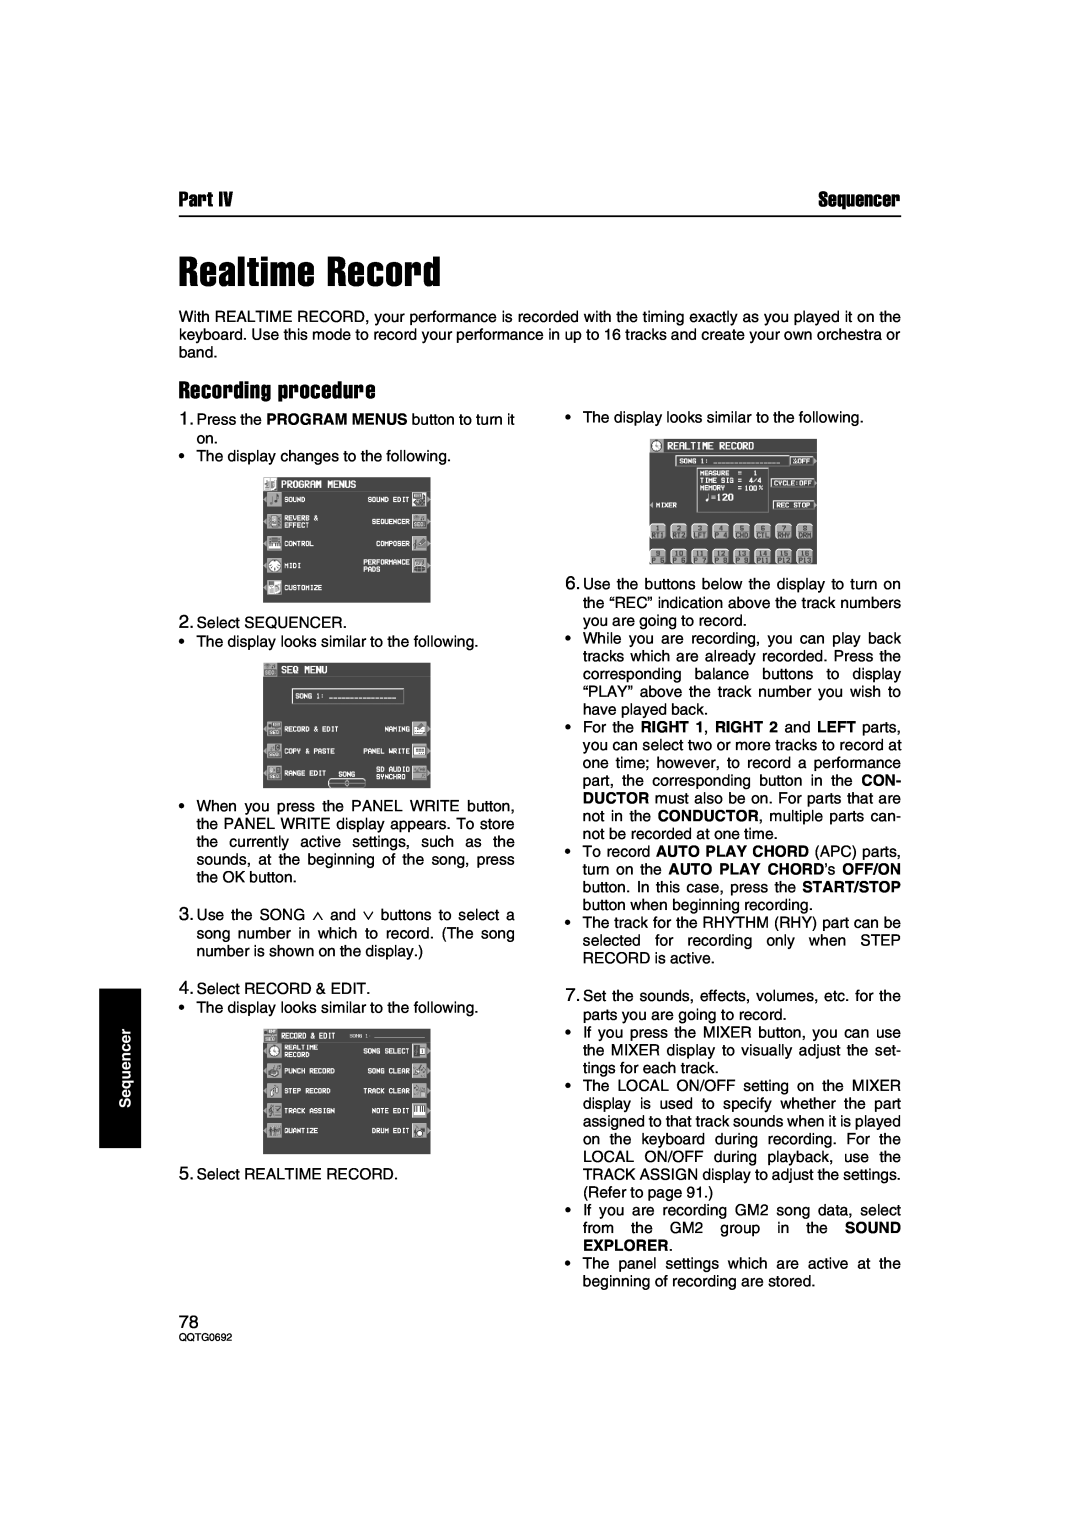 Panasonic SX-KN2600, SX-KN2400 manual Realtime Record, Recording procedure, Part, Sequencer 